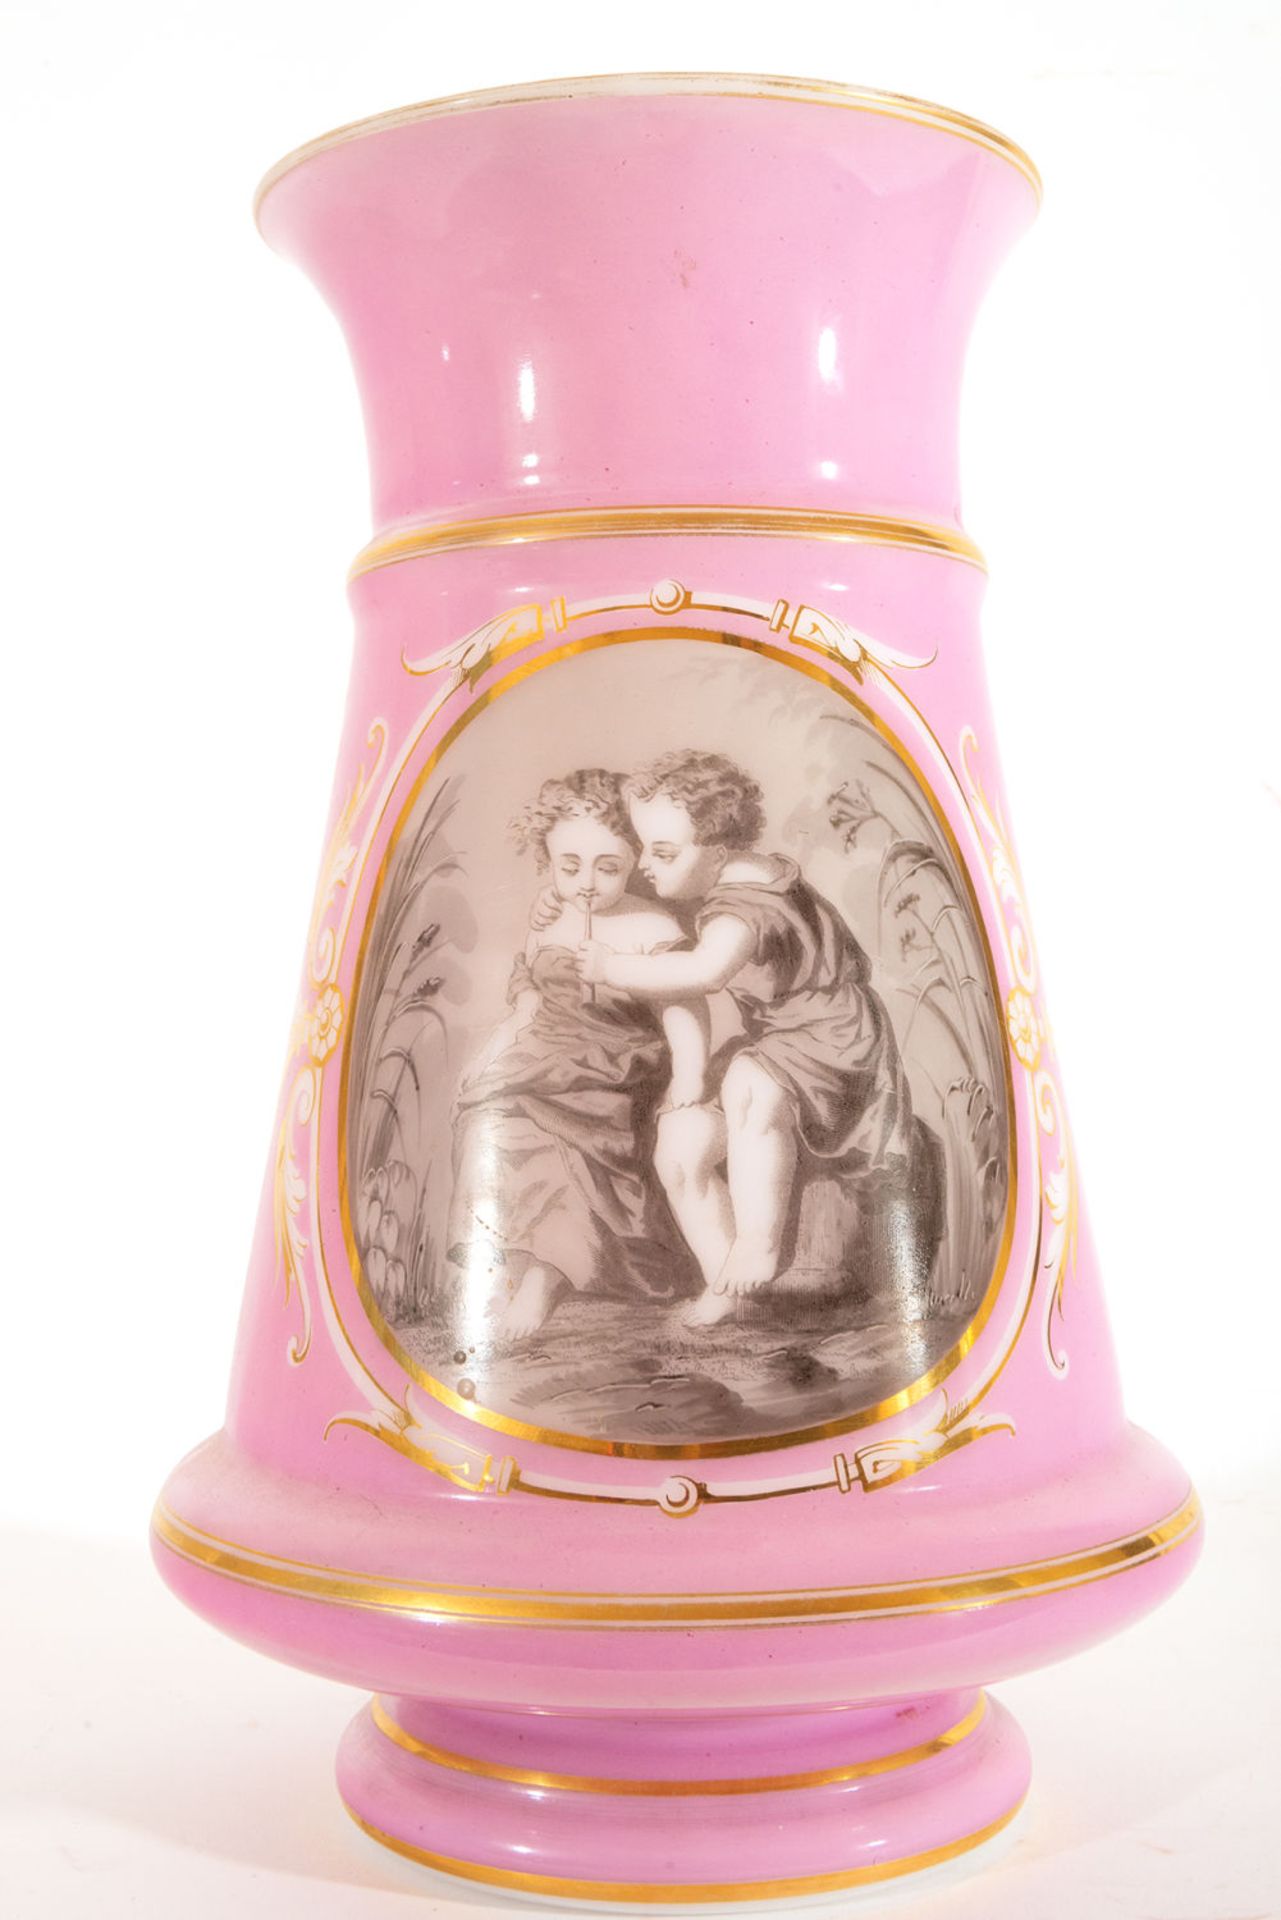 Pair of Opaline Vases with Romantic Scenes, 19th century - Image 4 of 10